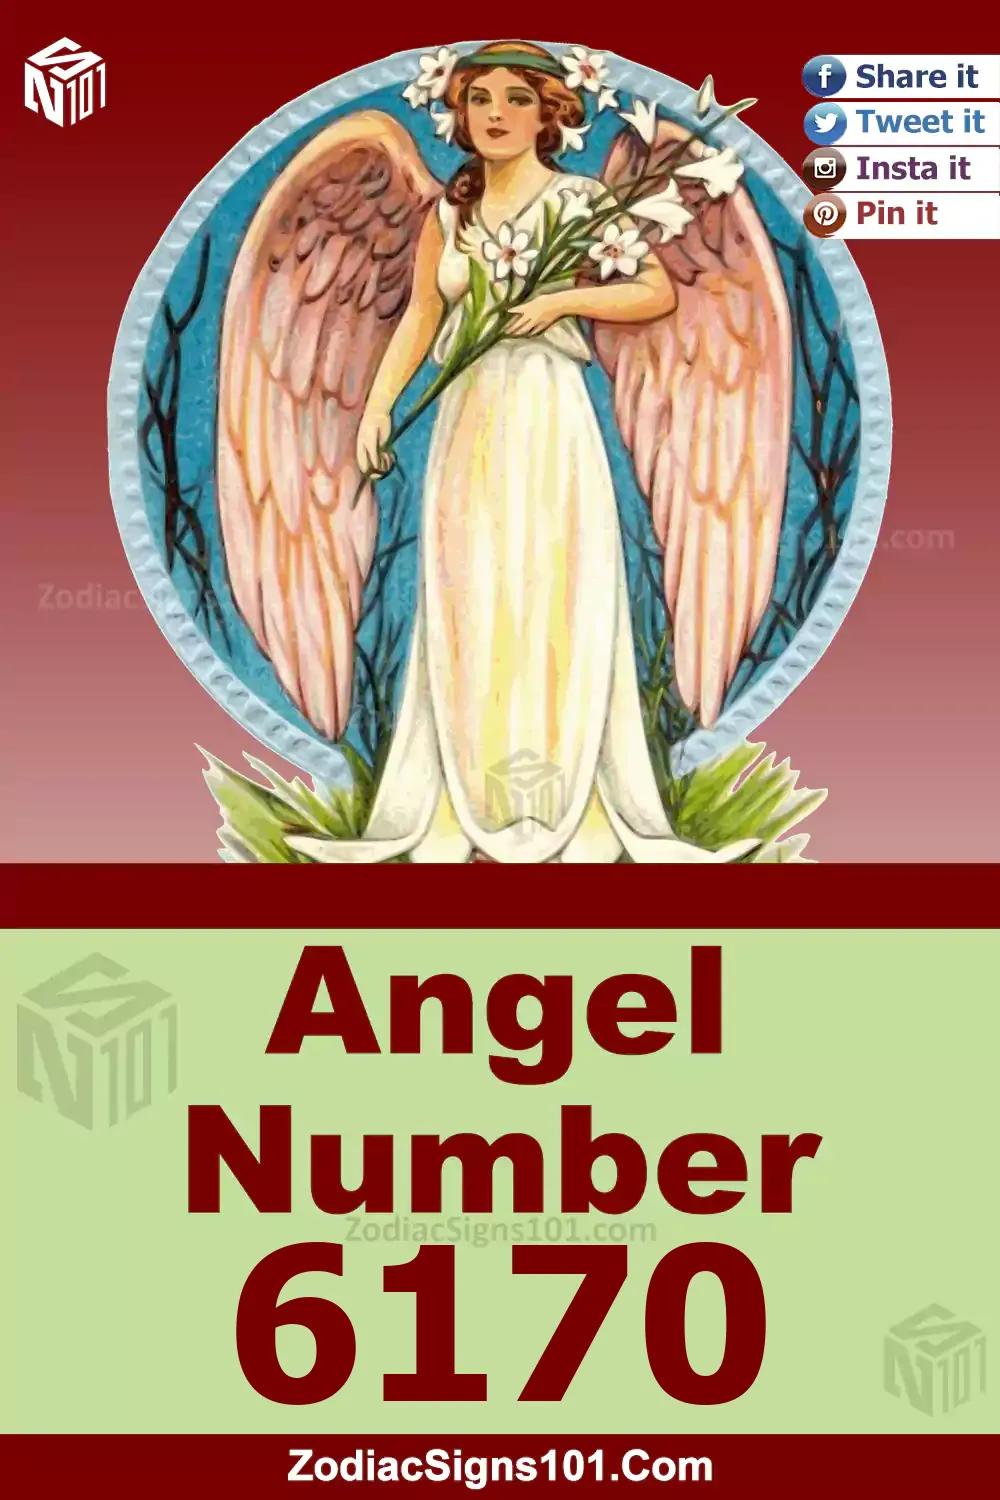 6170-Angel-Number-Meaning.jpg